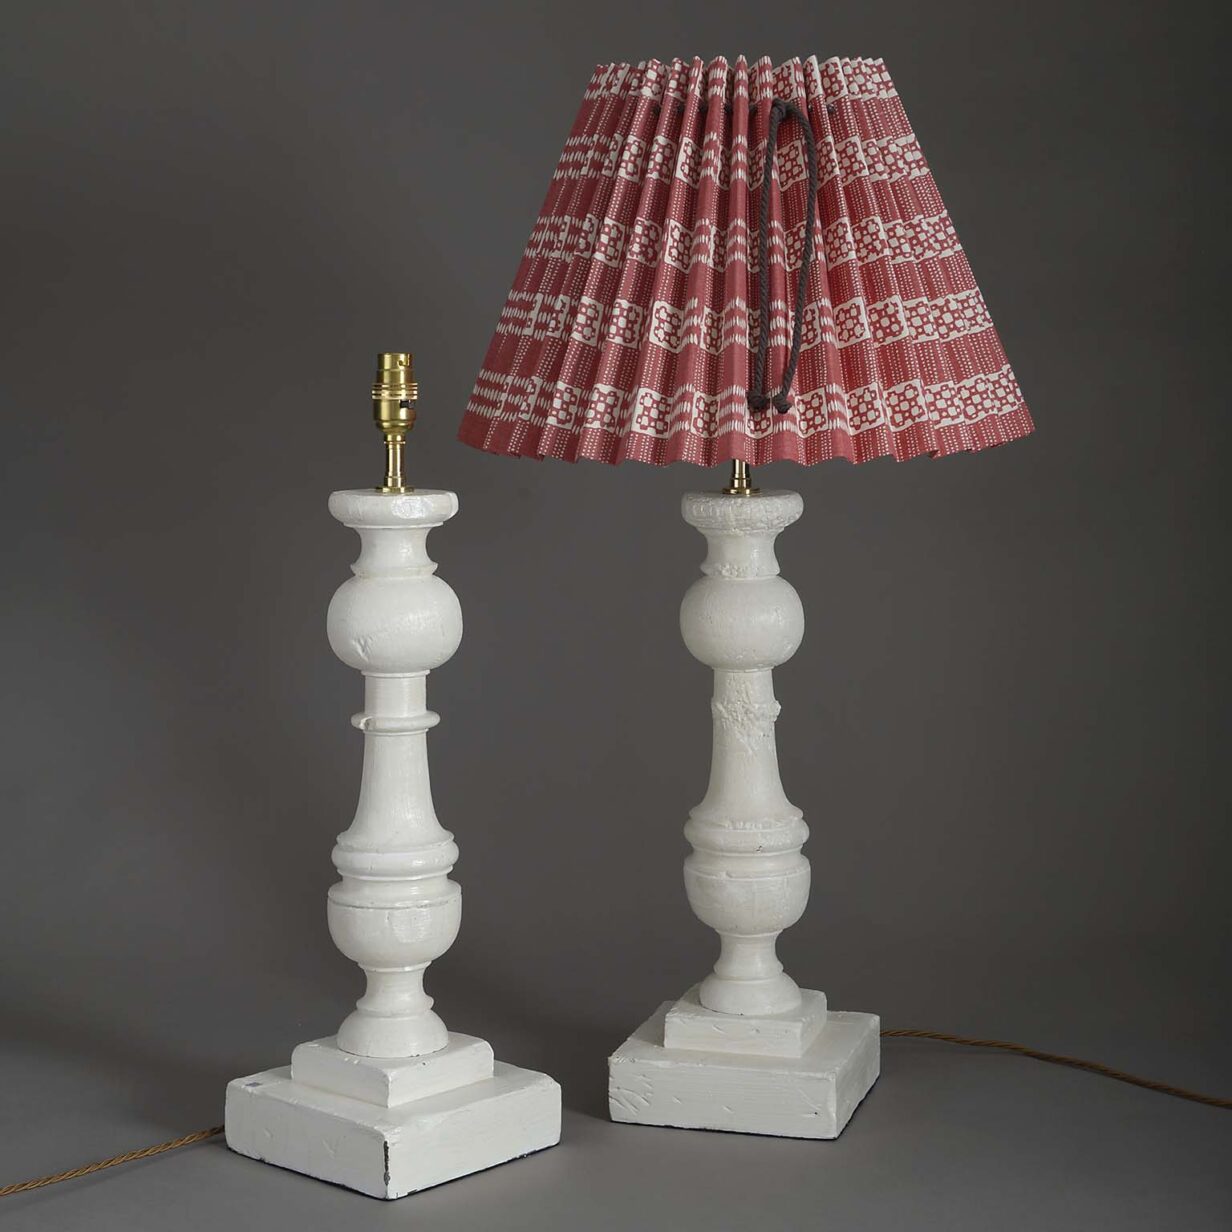 Pair of balustrade lamps